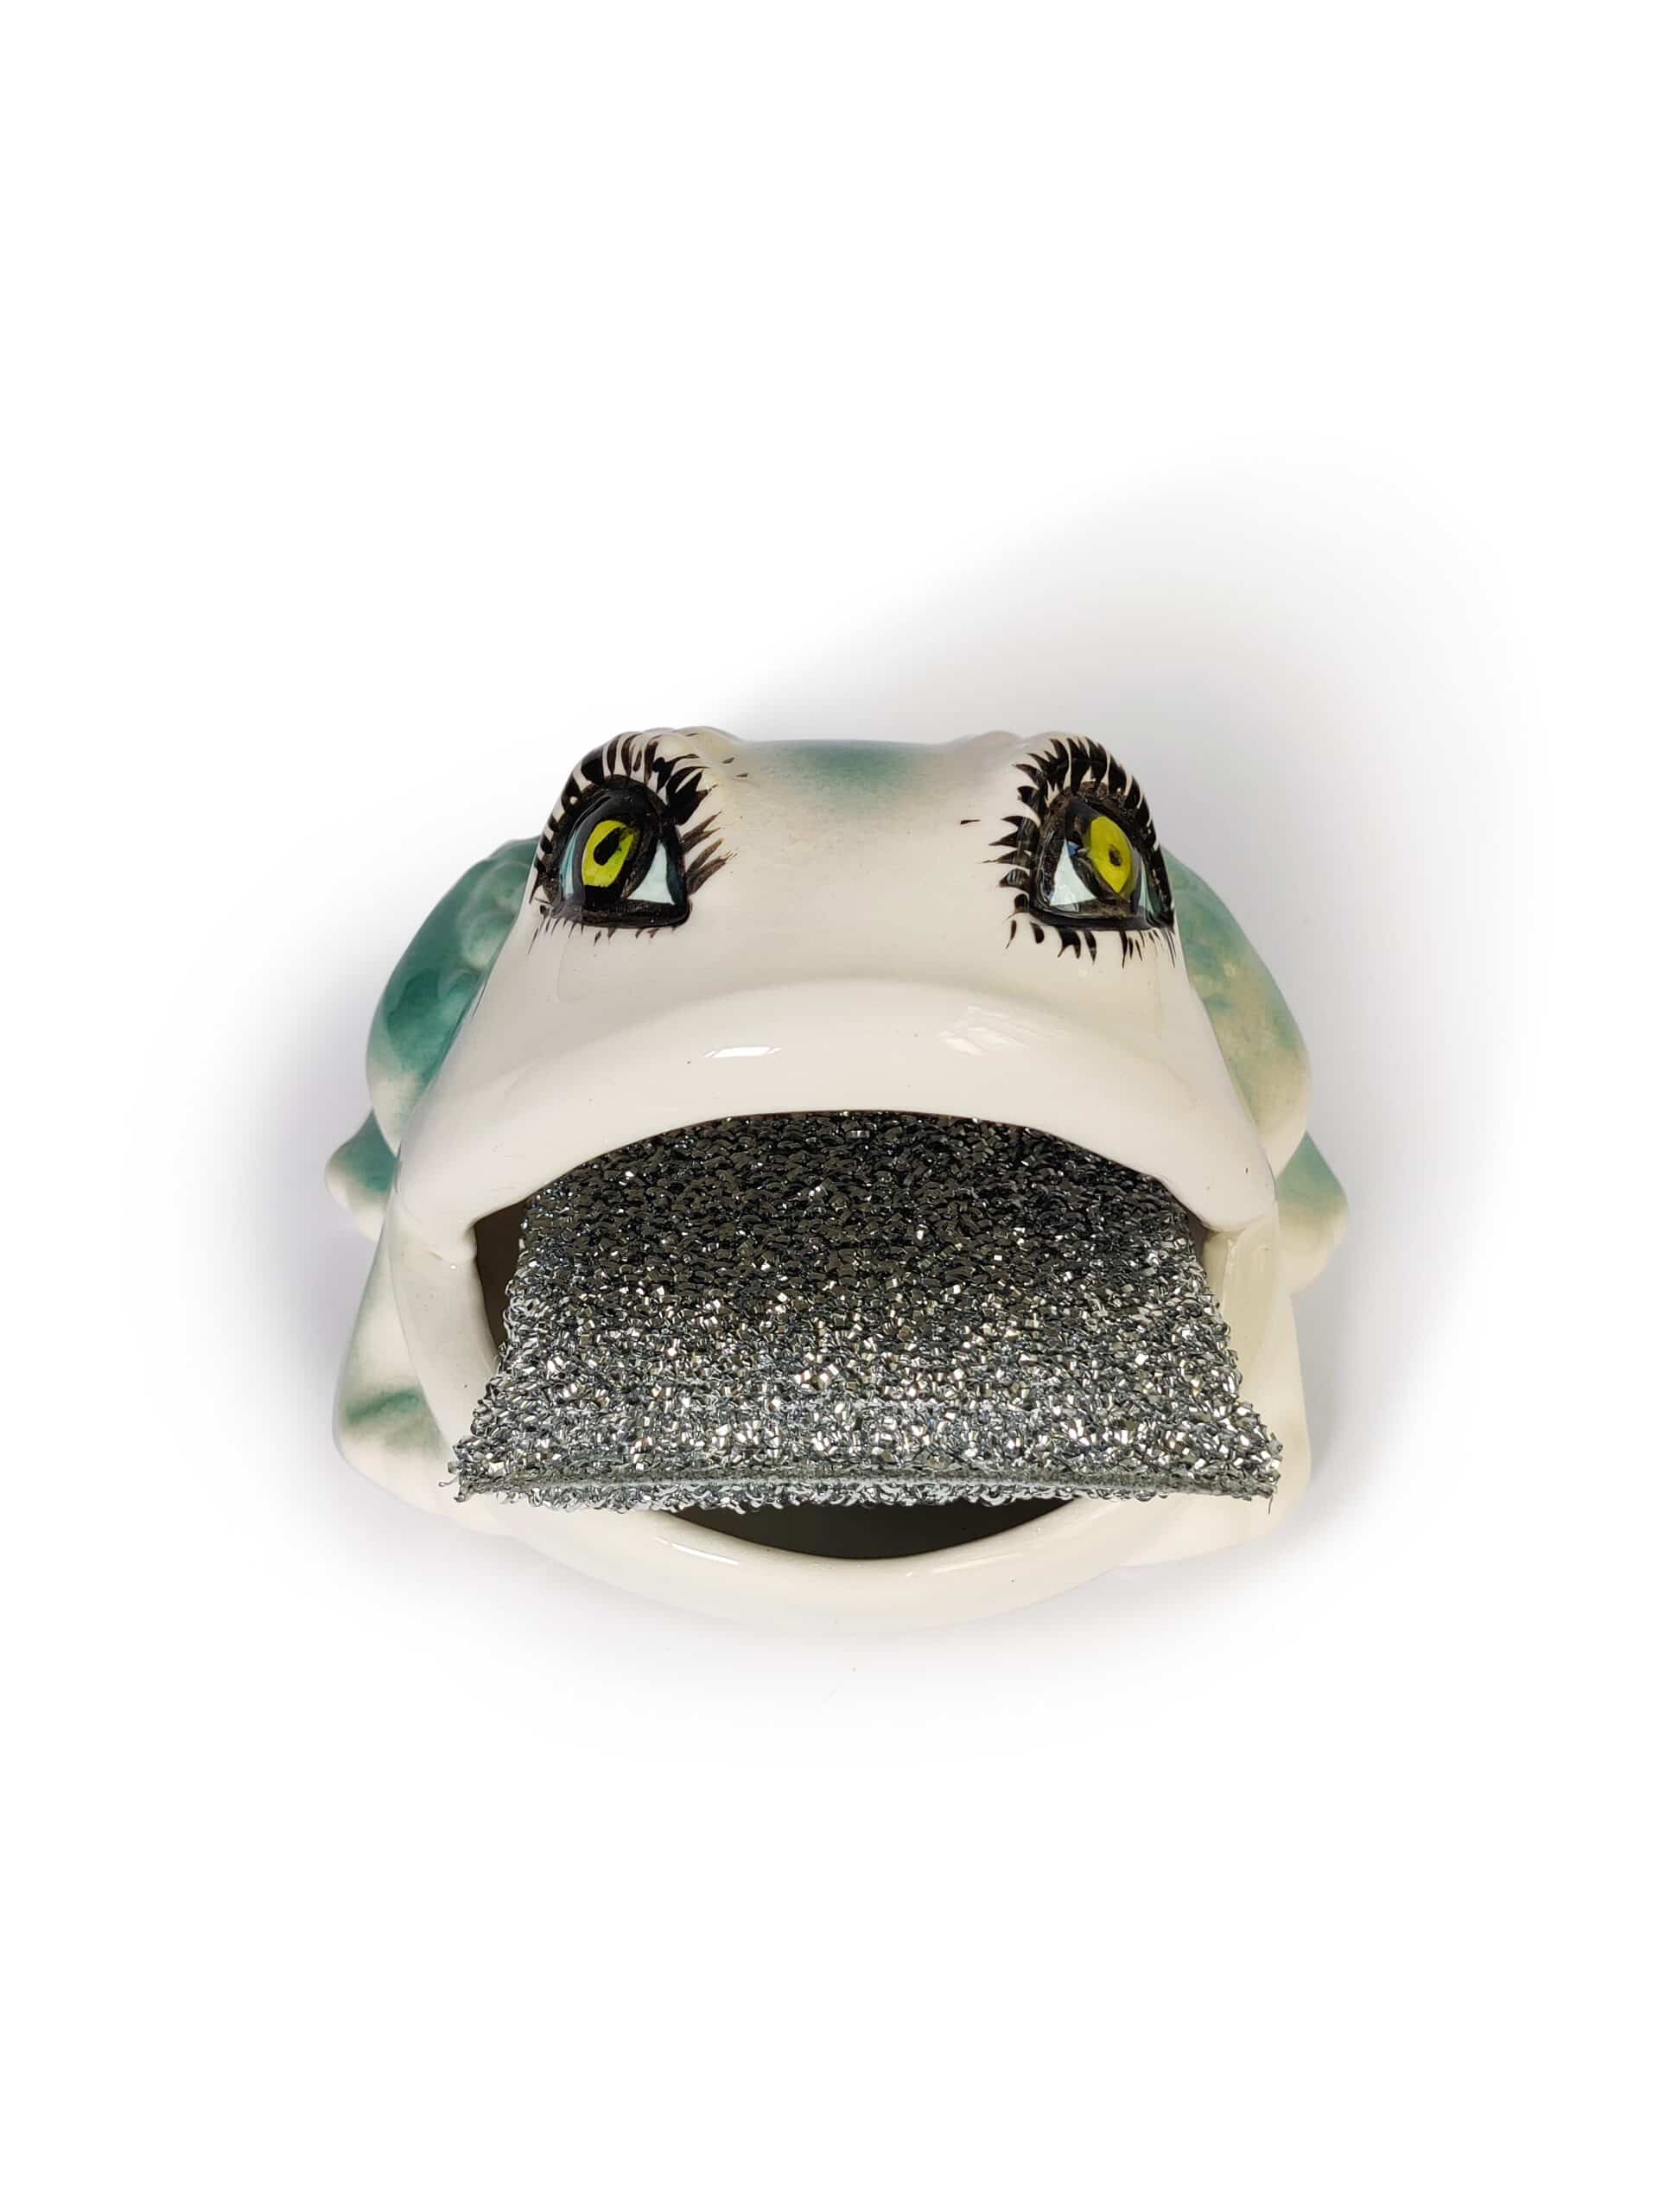 Ceramic Kitchen Sponge Holder Lady Frog Shaped